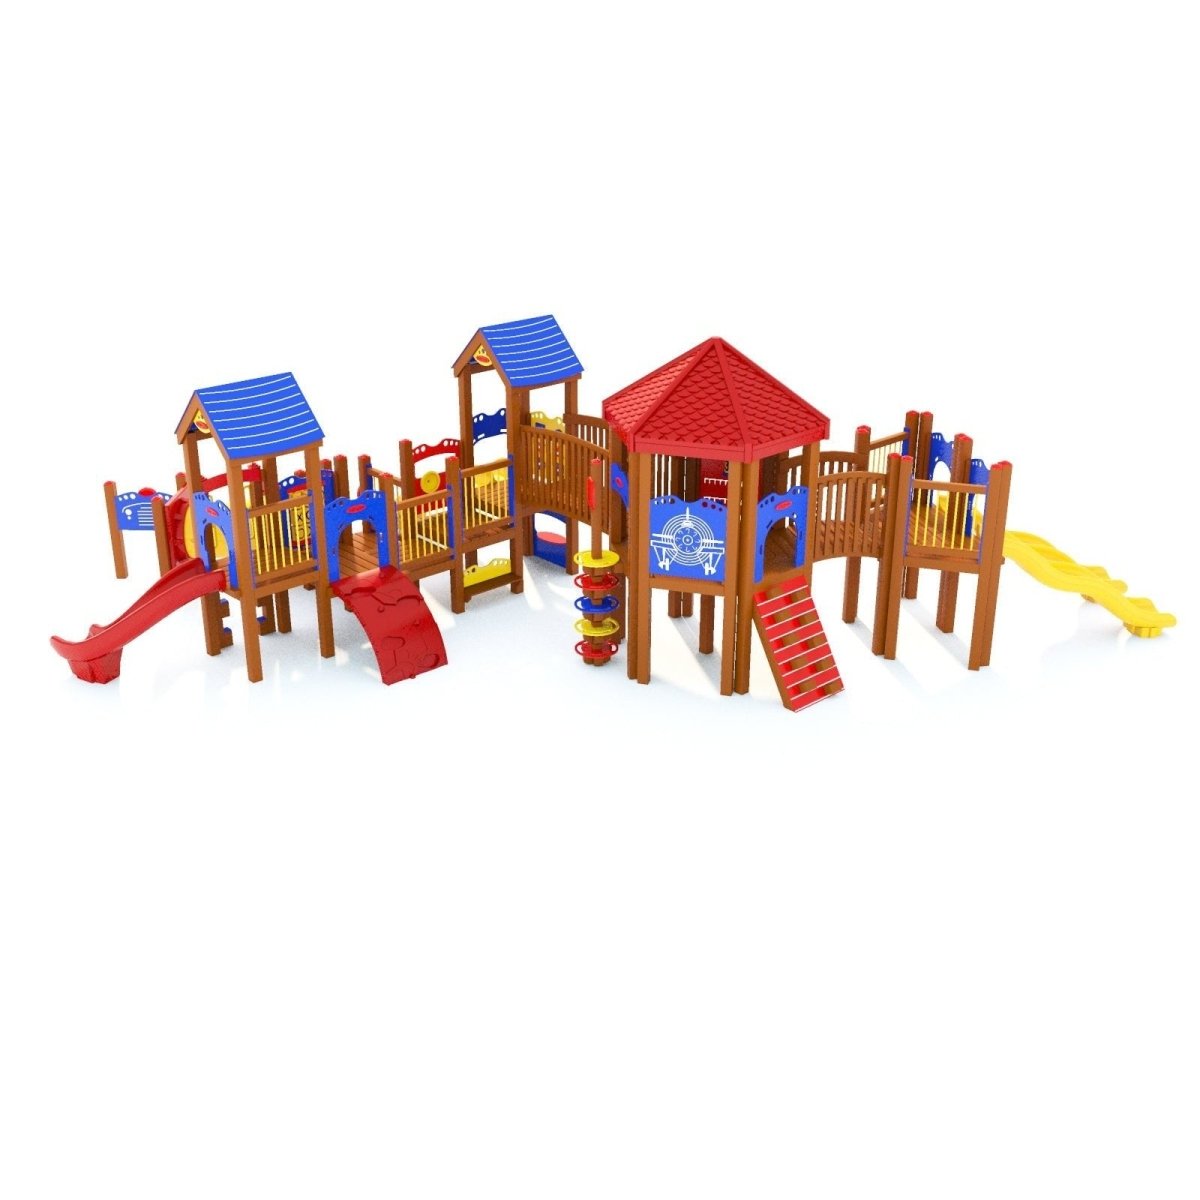 Kenton Playset - Preschool Playgrounds - Playtopia, Inc.